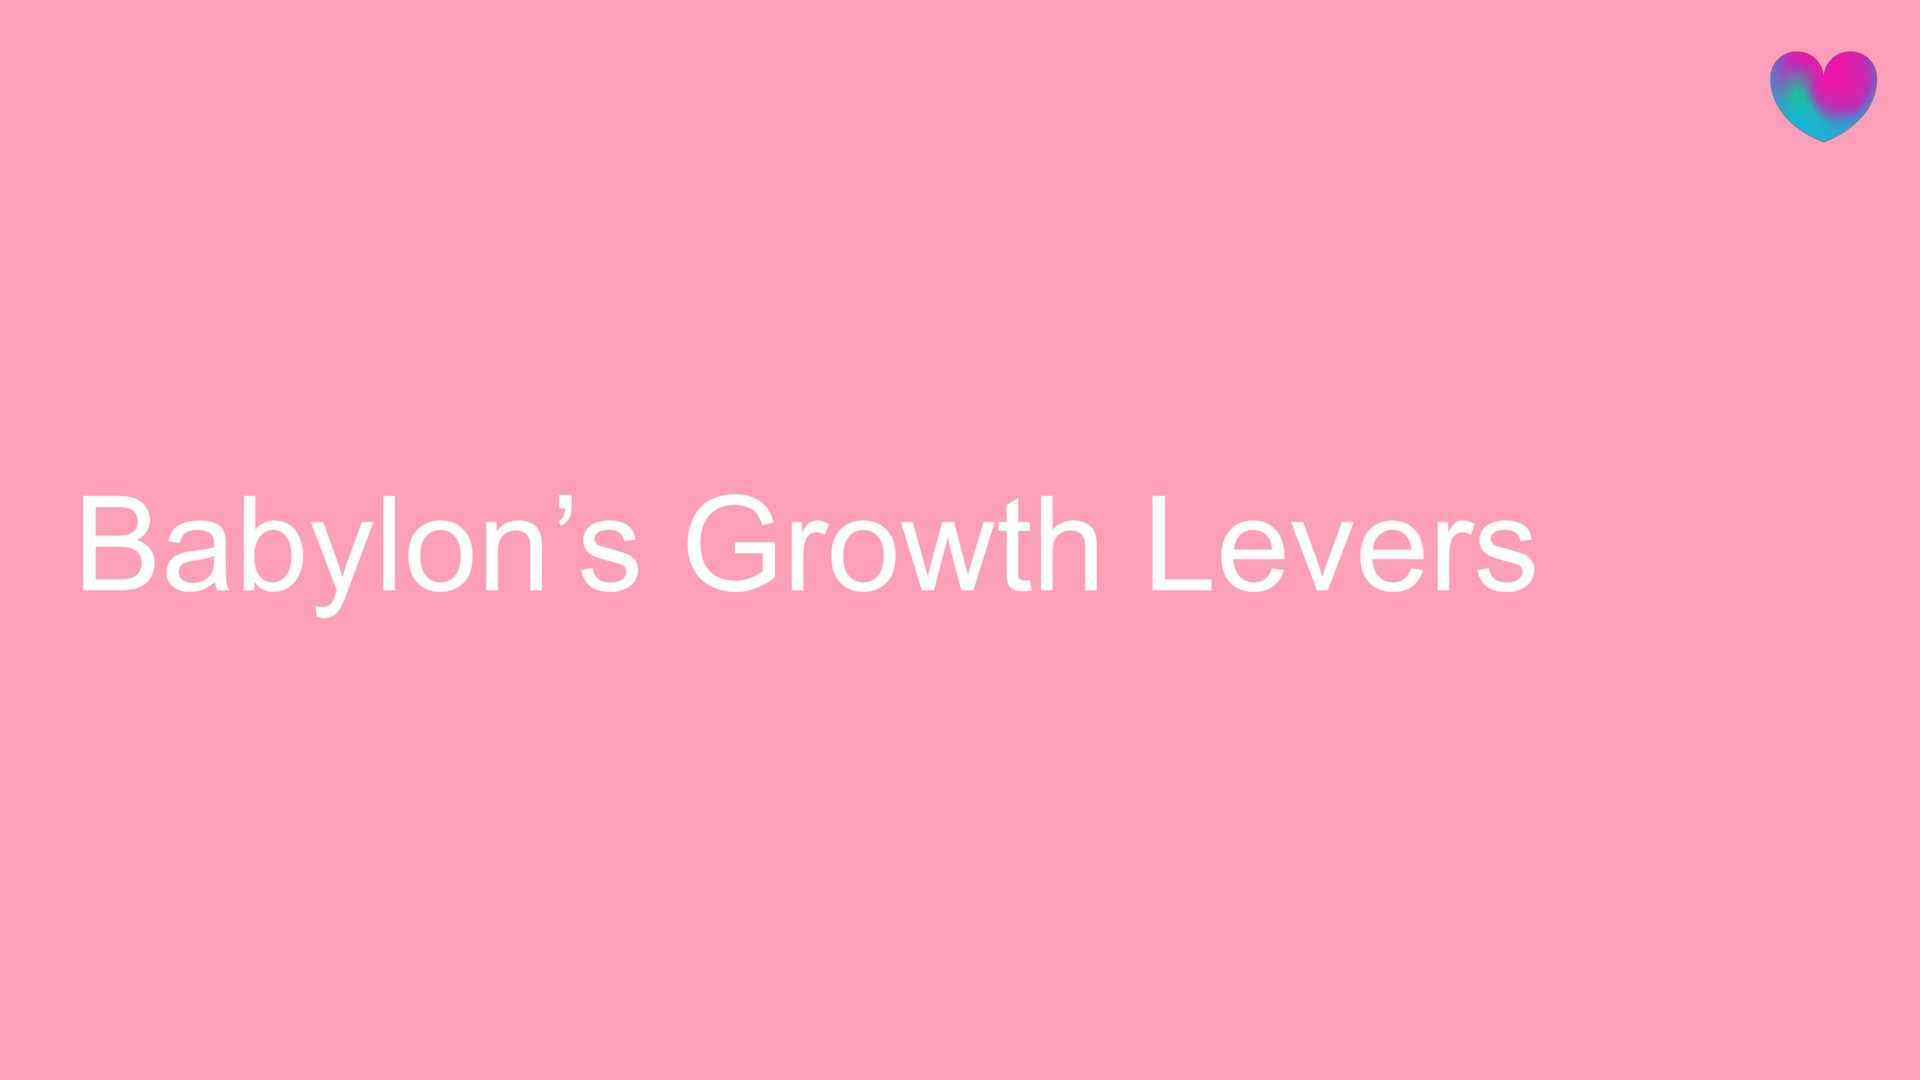 growth levers | Babylon